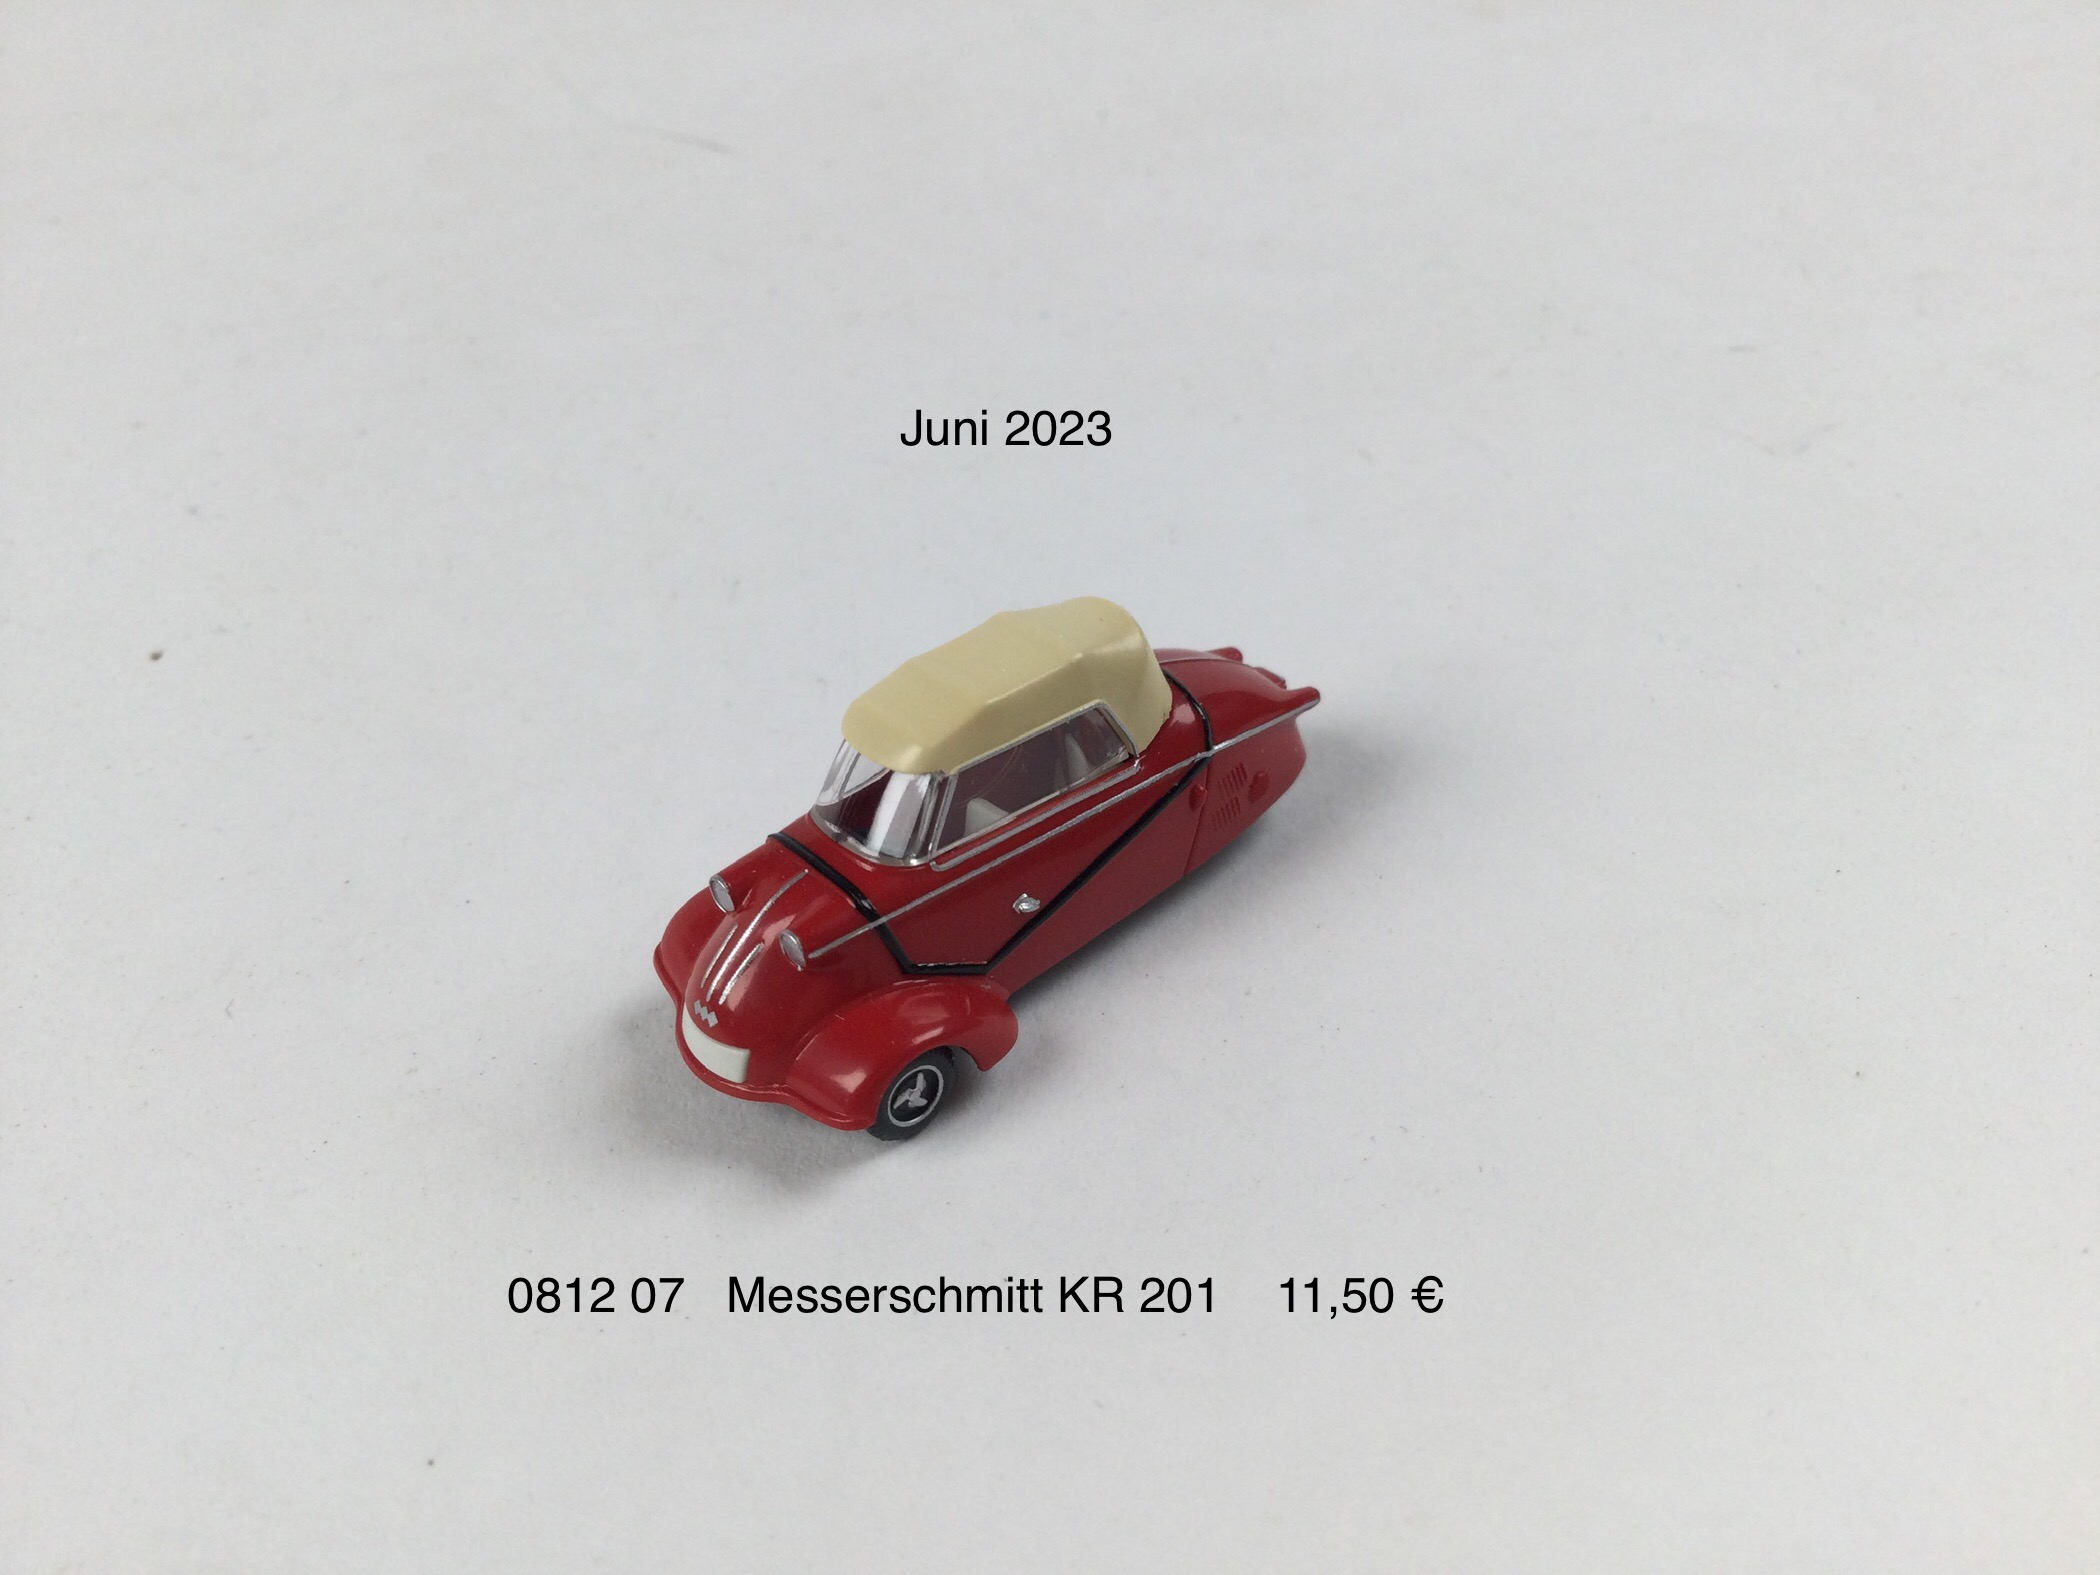 Messerschmitt KR 201 "rubinrot/elfenbeinbeige"